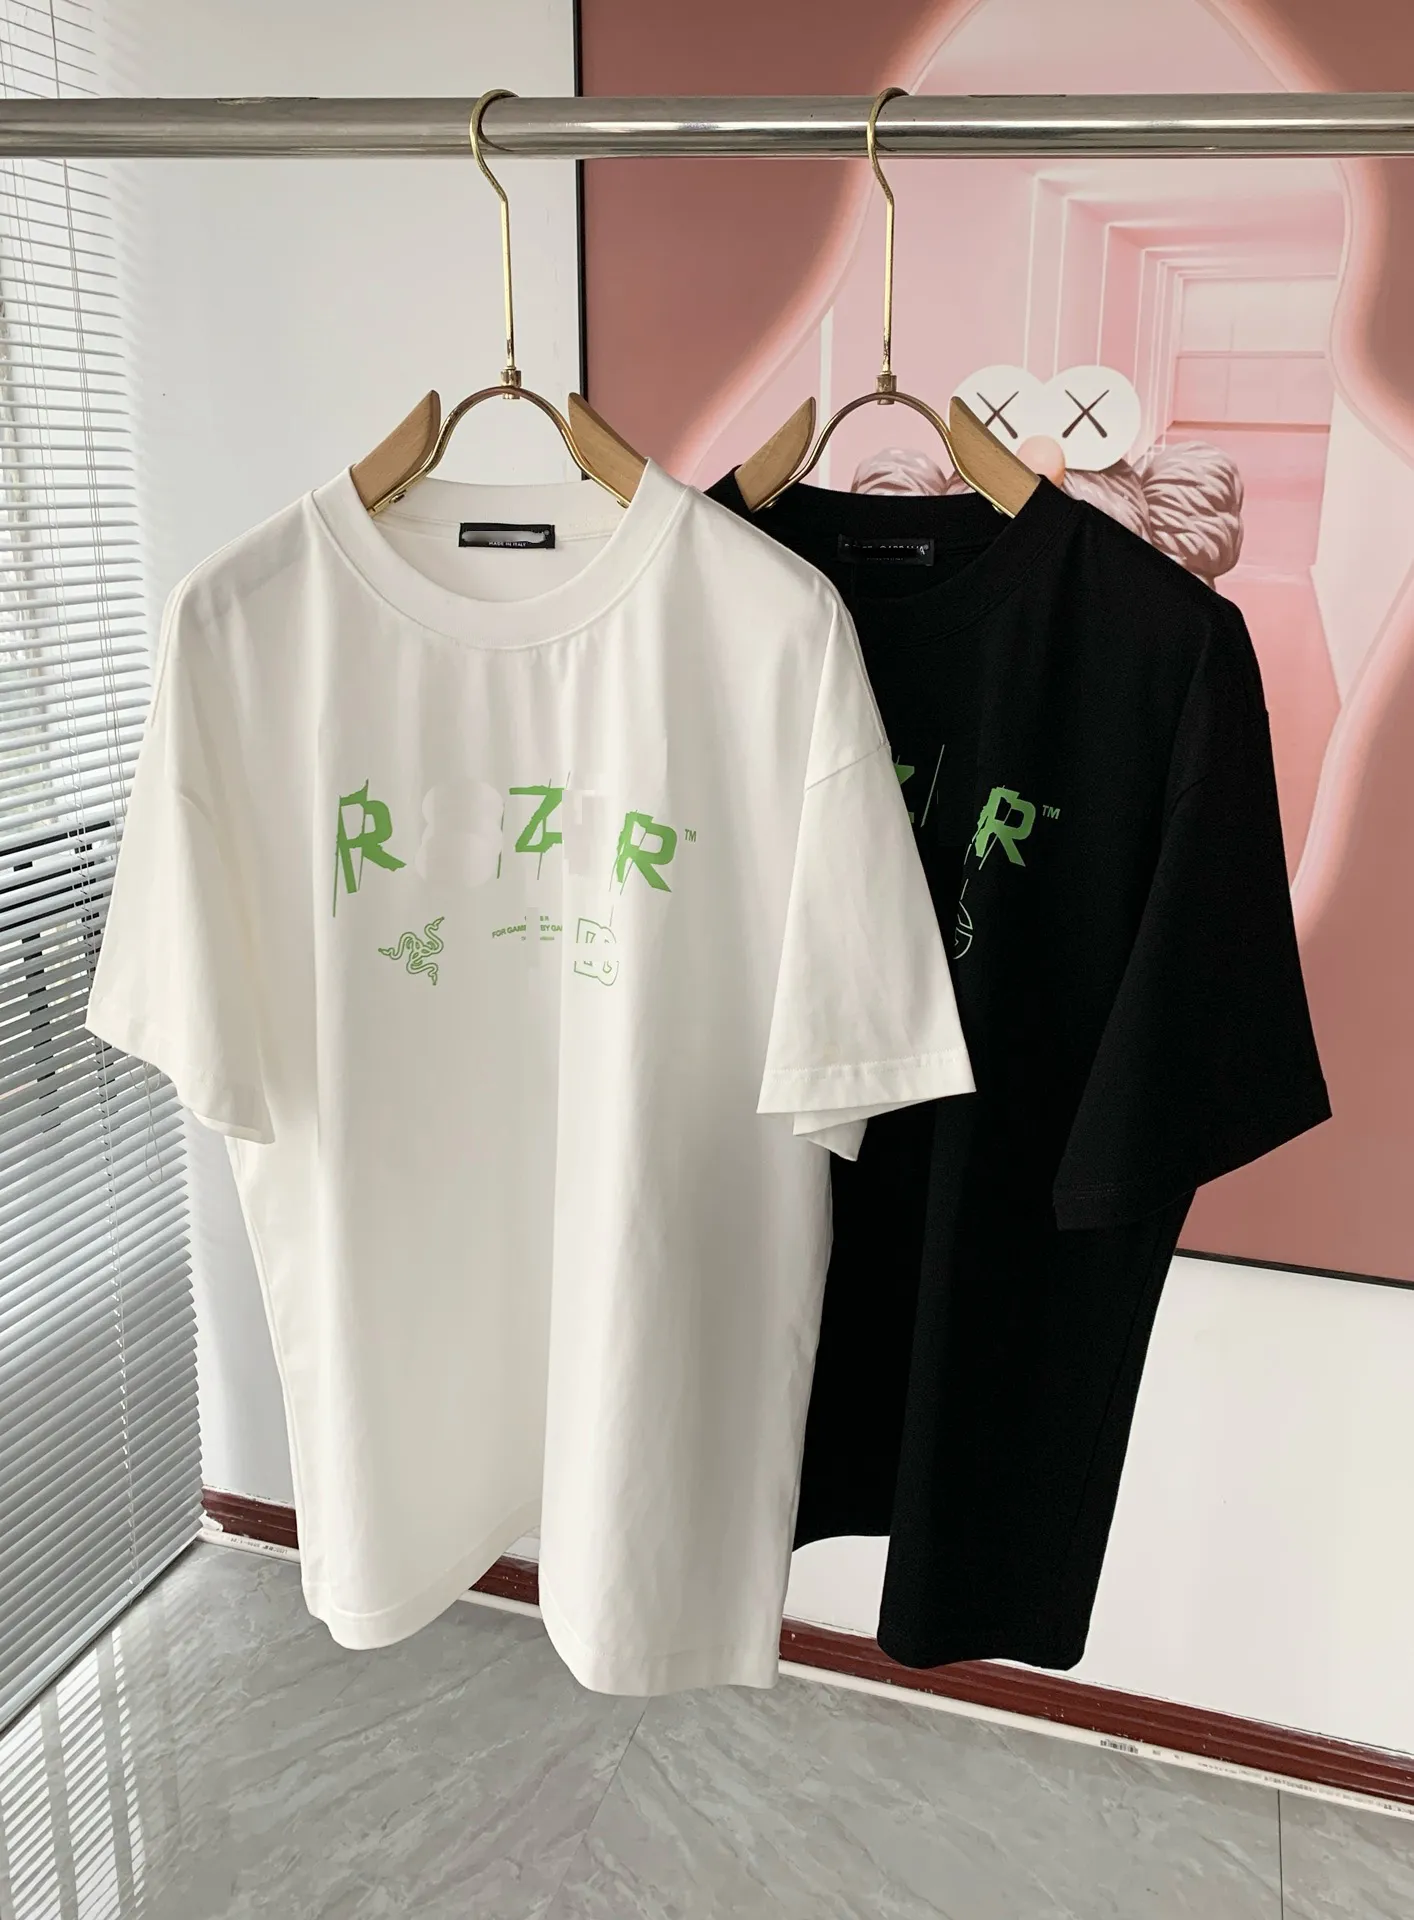 Camiseta de moda para hombre Inicio Camiseta para hombre Diseñador con estampado de letras superiores edición suelta diaria con camisetas con sudadera de manga corta